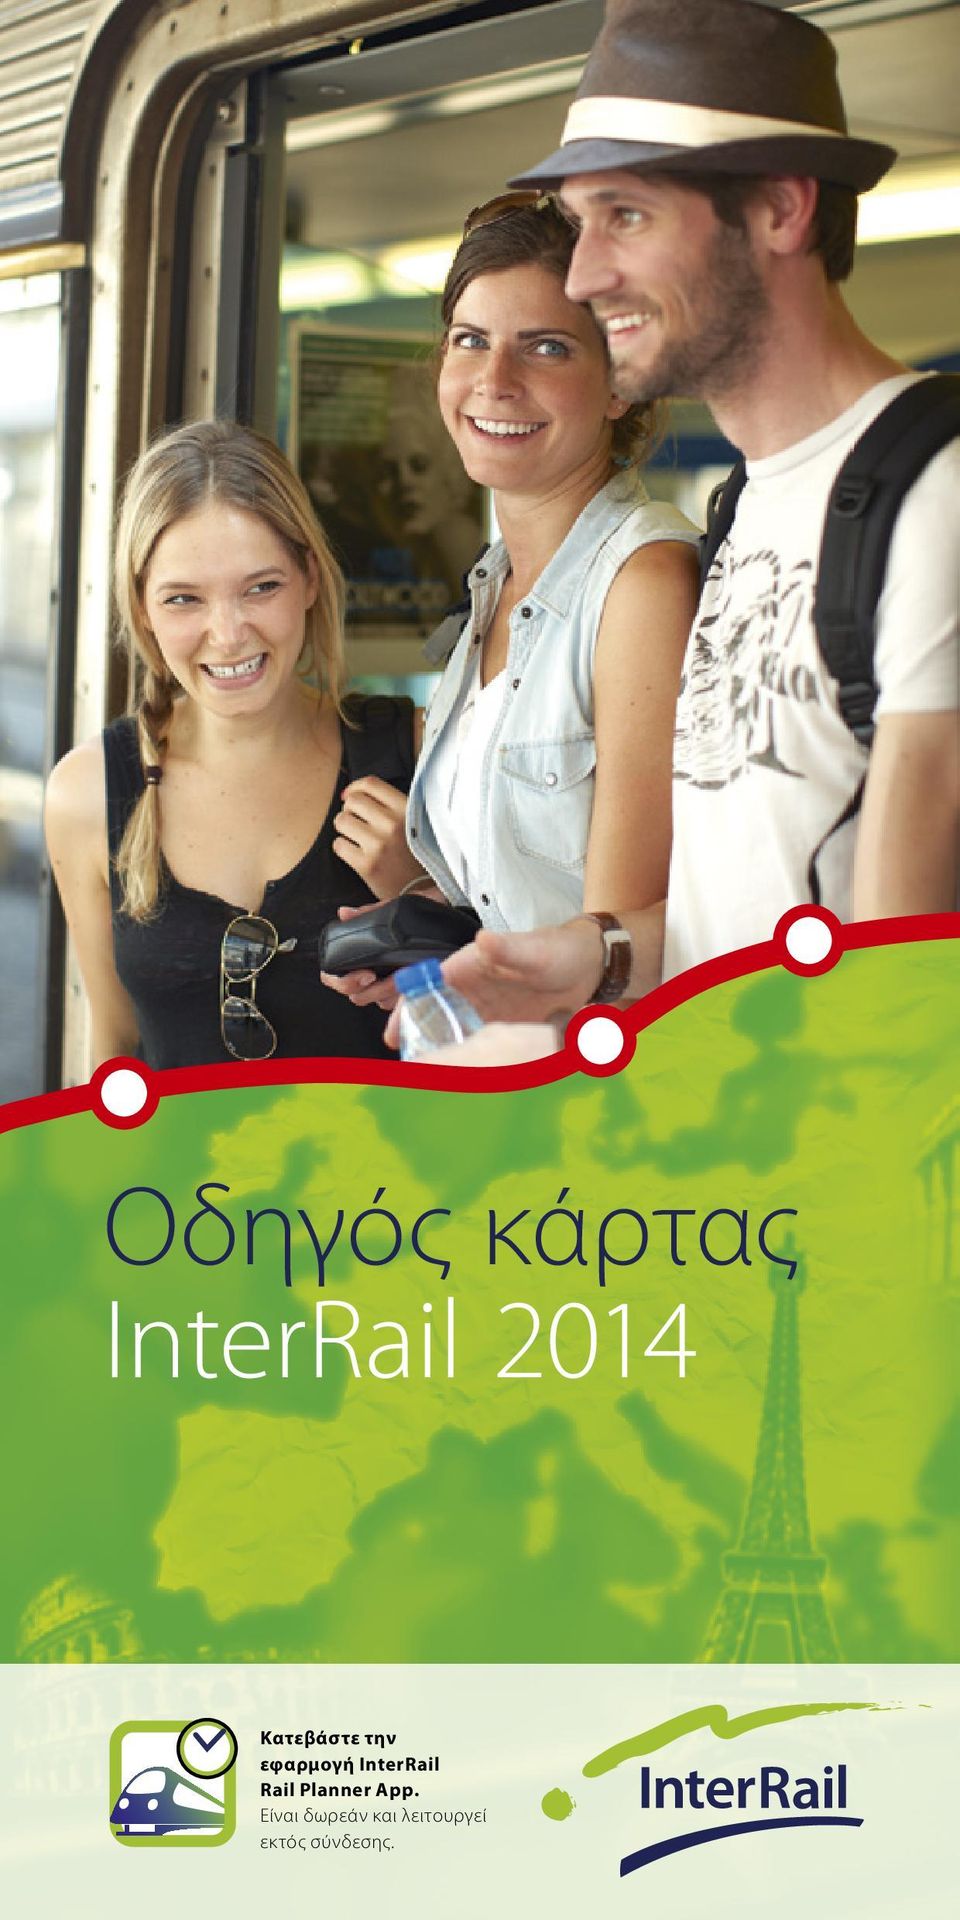 InterRail Rail Planner App.